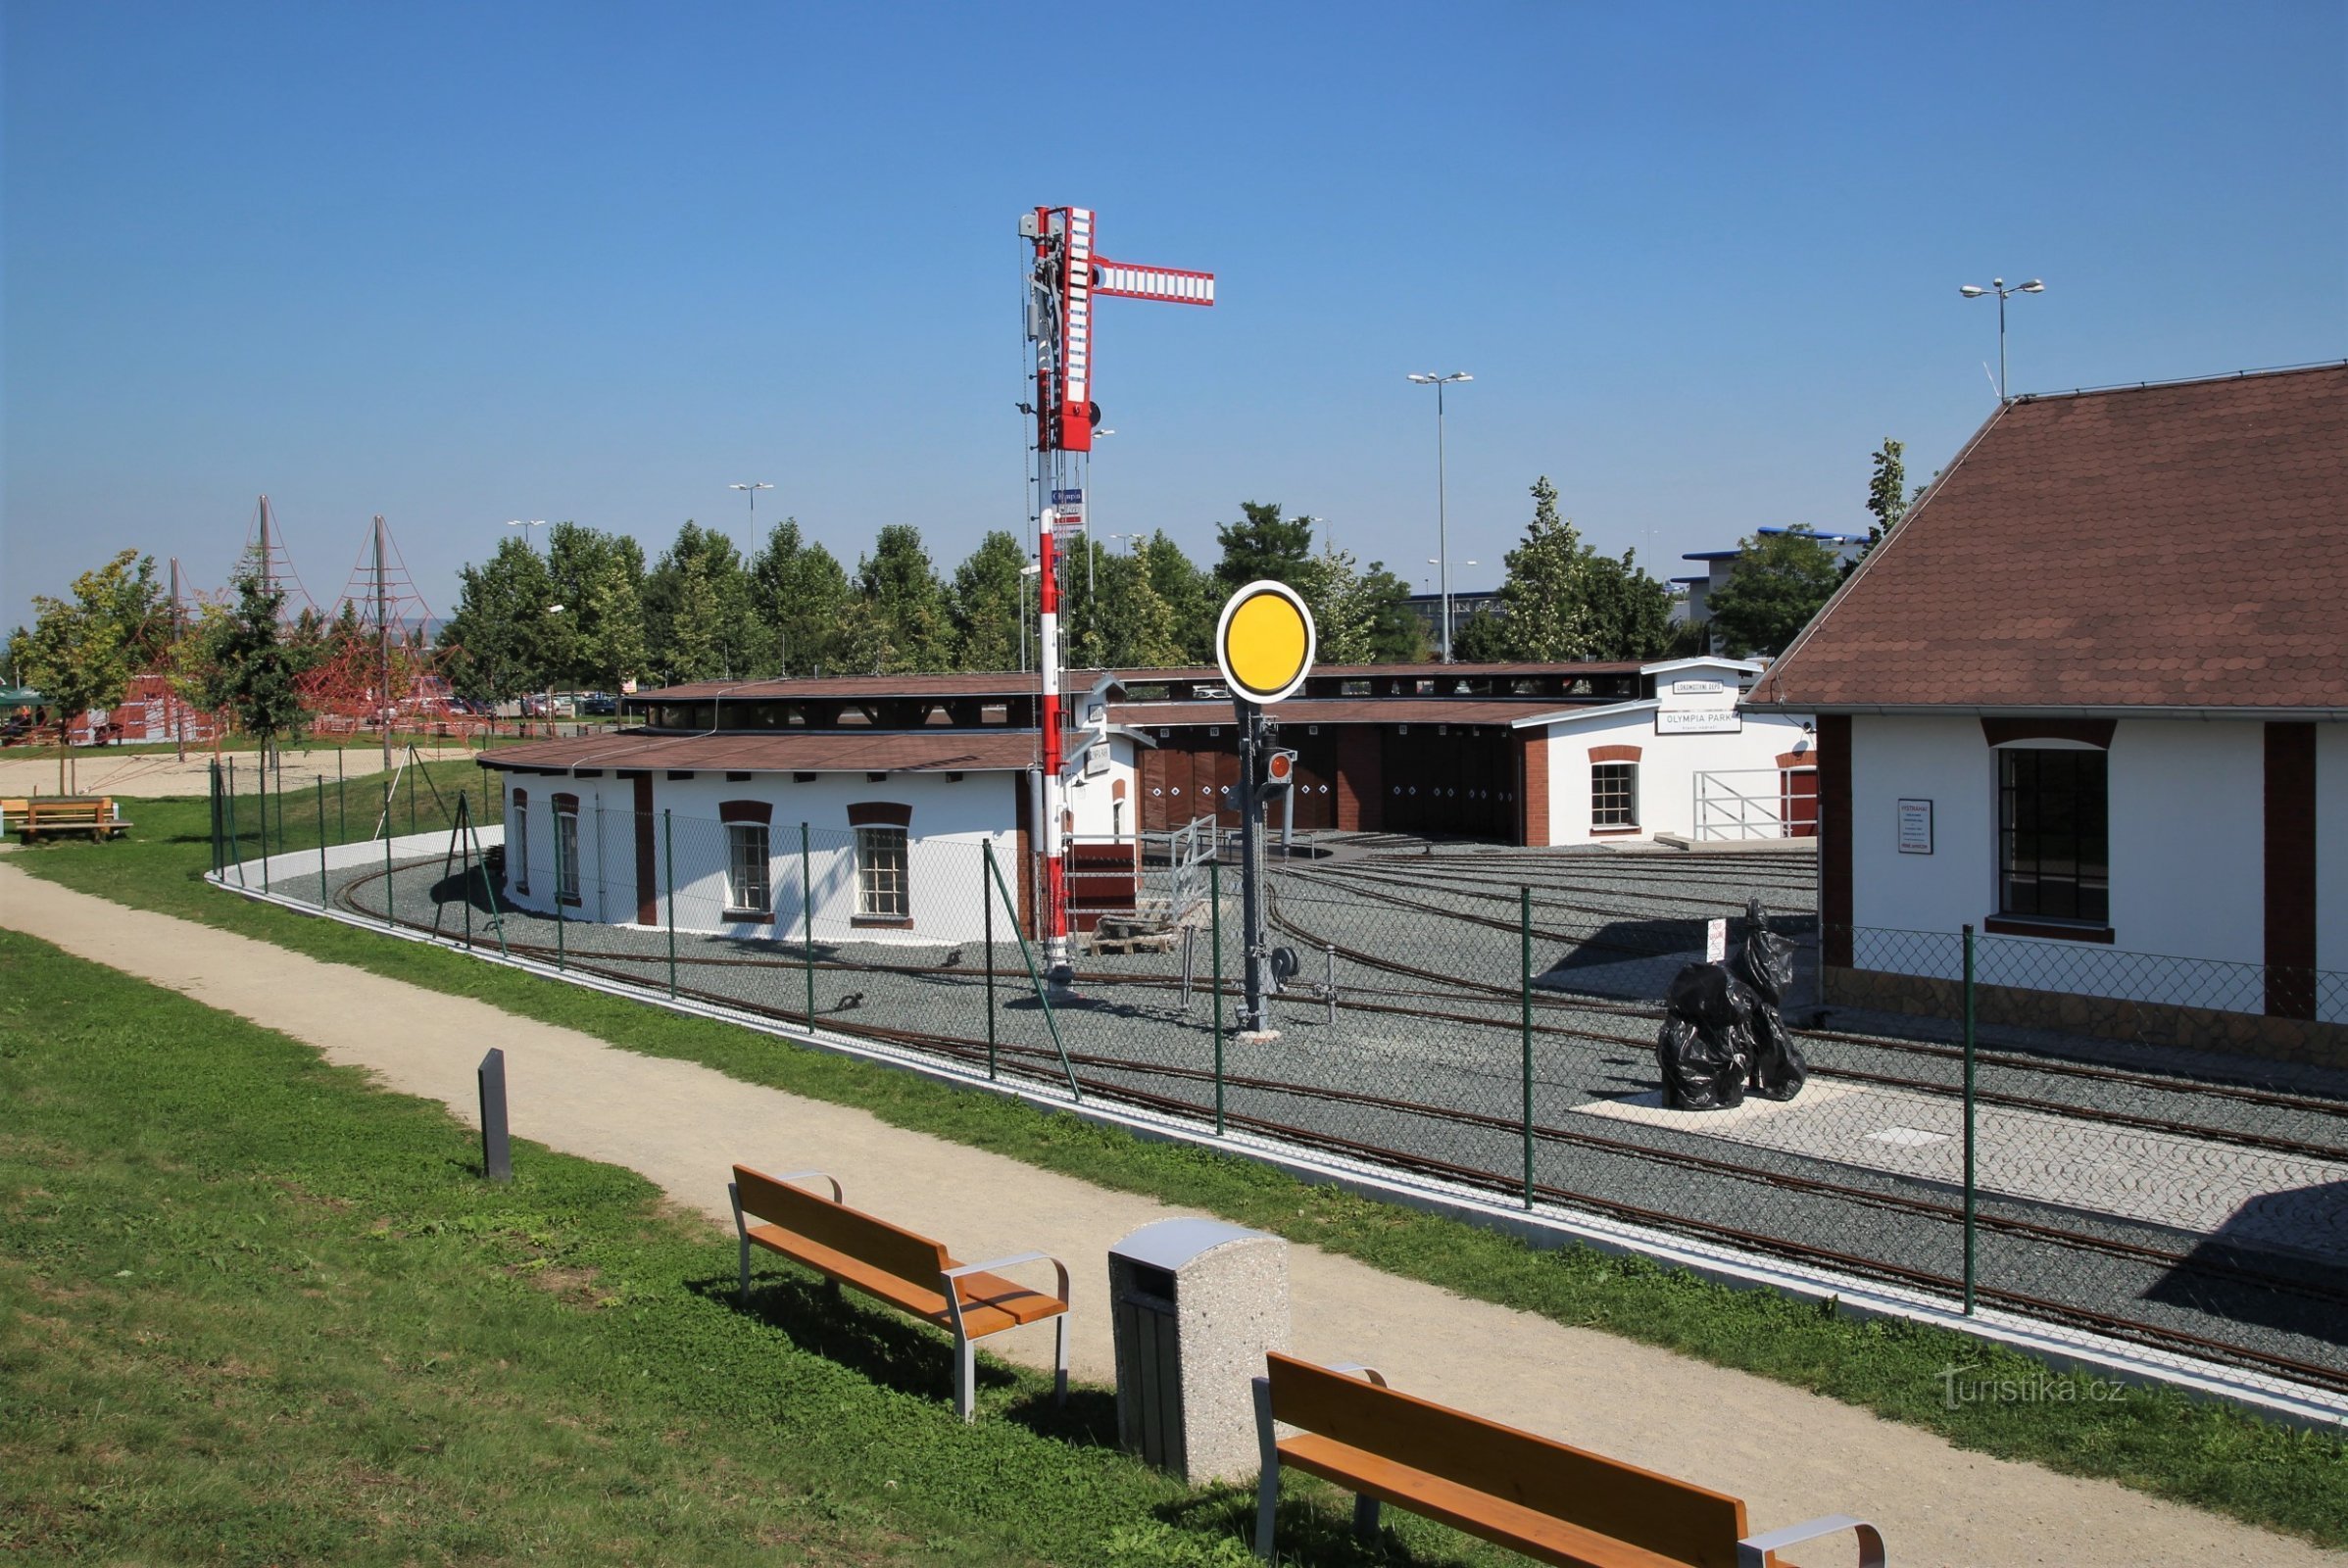 Parkeisenbahn - Bahnhof